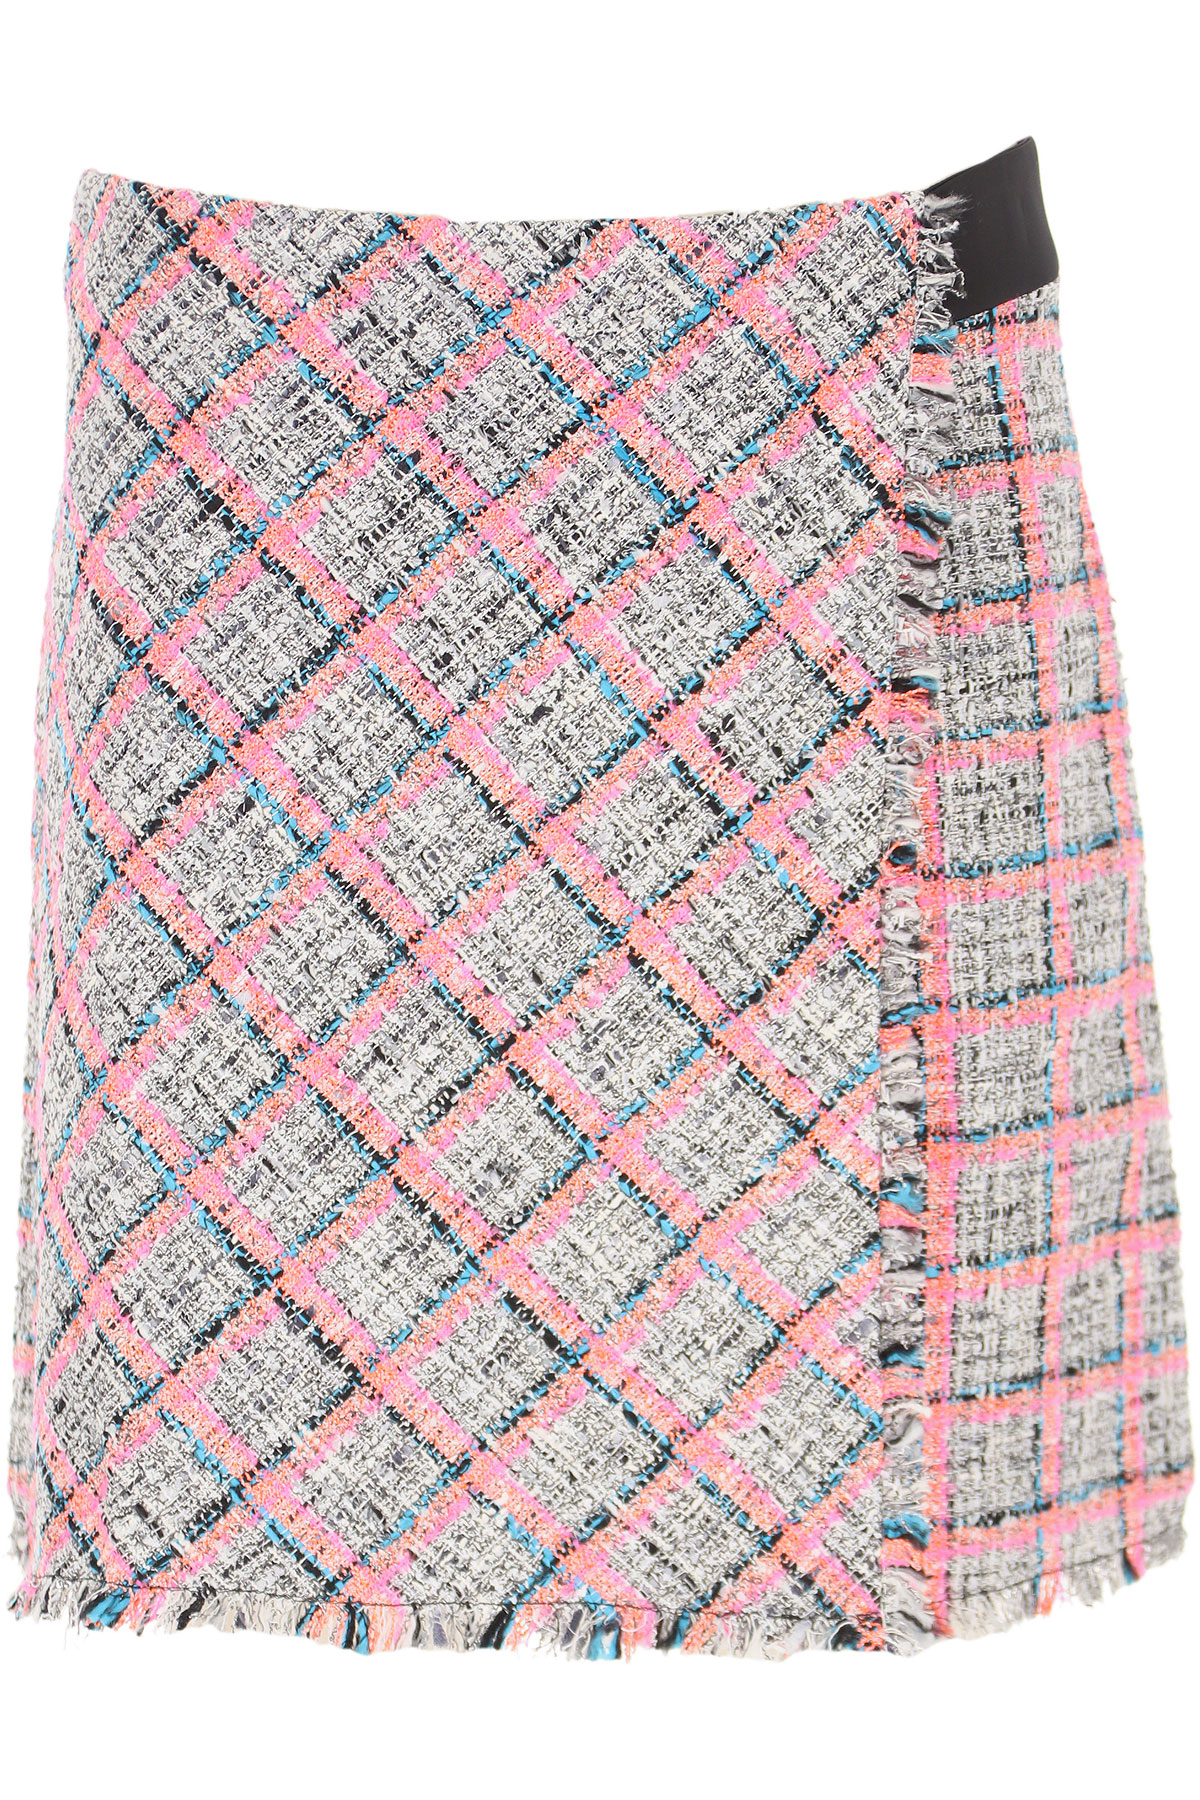 Karl LagerfeldKarl Lagerfeld Skirt for Women, Pink, Cotton, 2021, 26 28 ...